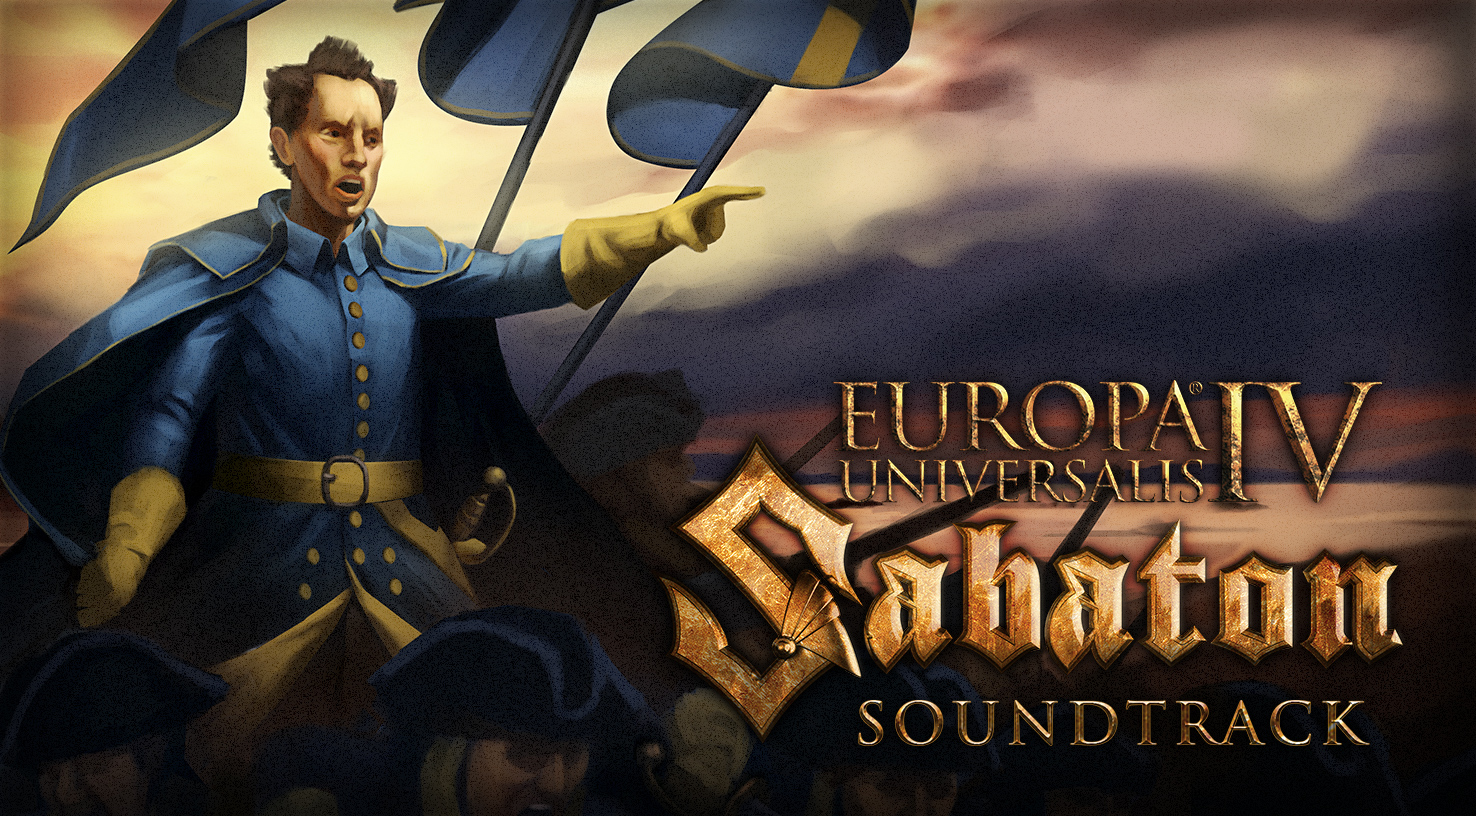 Europa Universalis IV: Sabaton Soundtrack Featured Screenshot #1